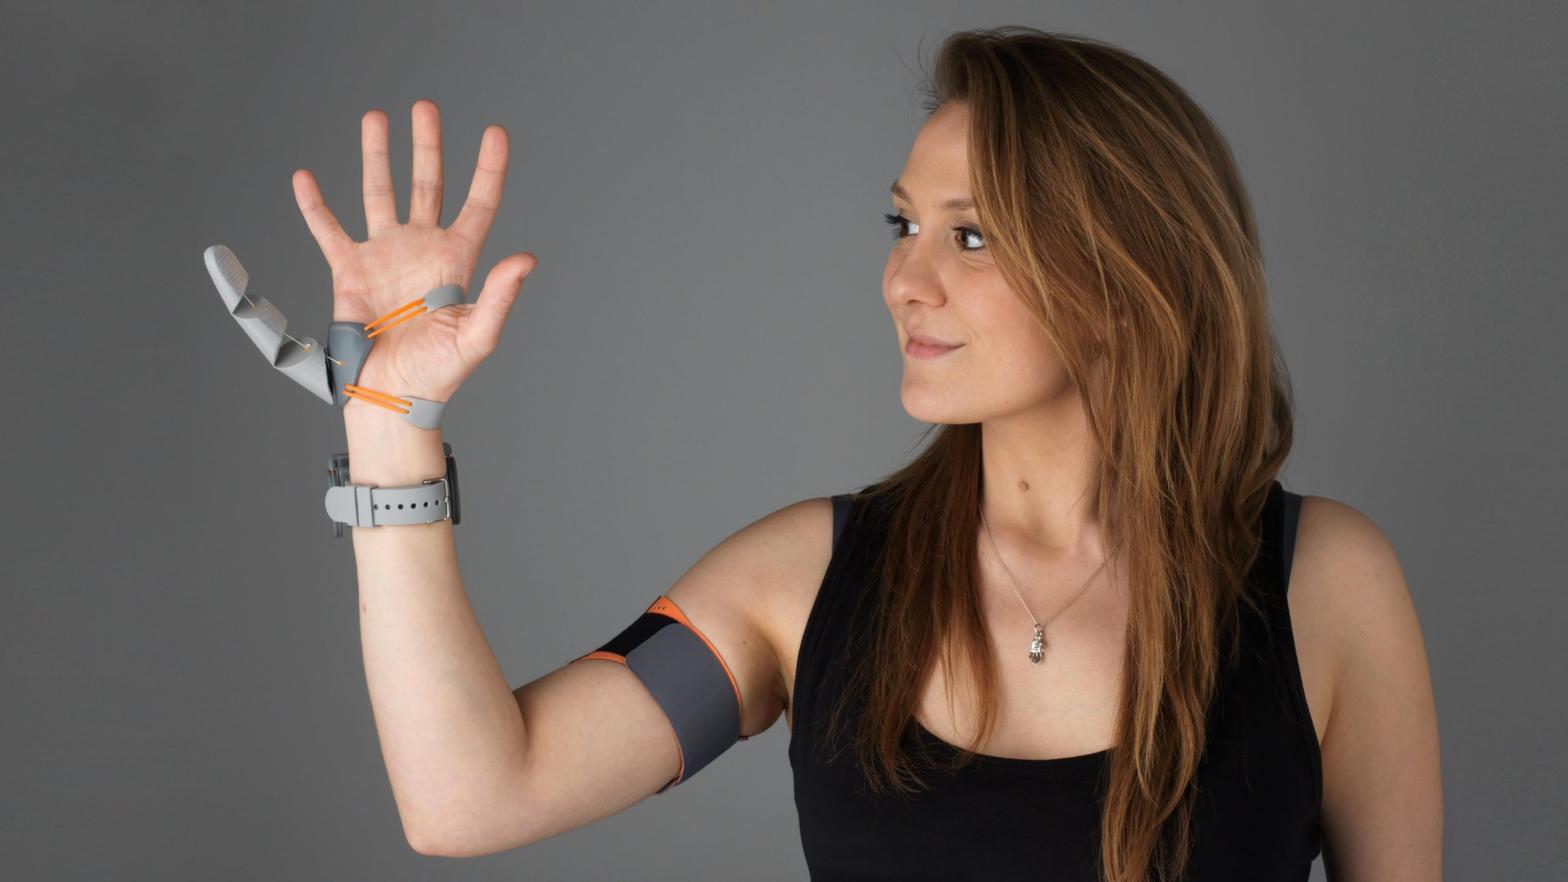 UCL designer Dani Clode with her 'Third Thumb' device. (Image: Dani Clode)